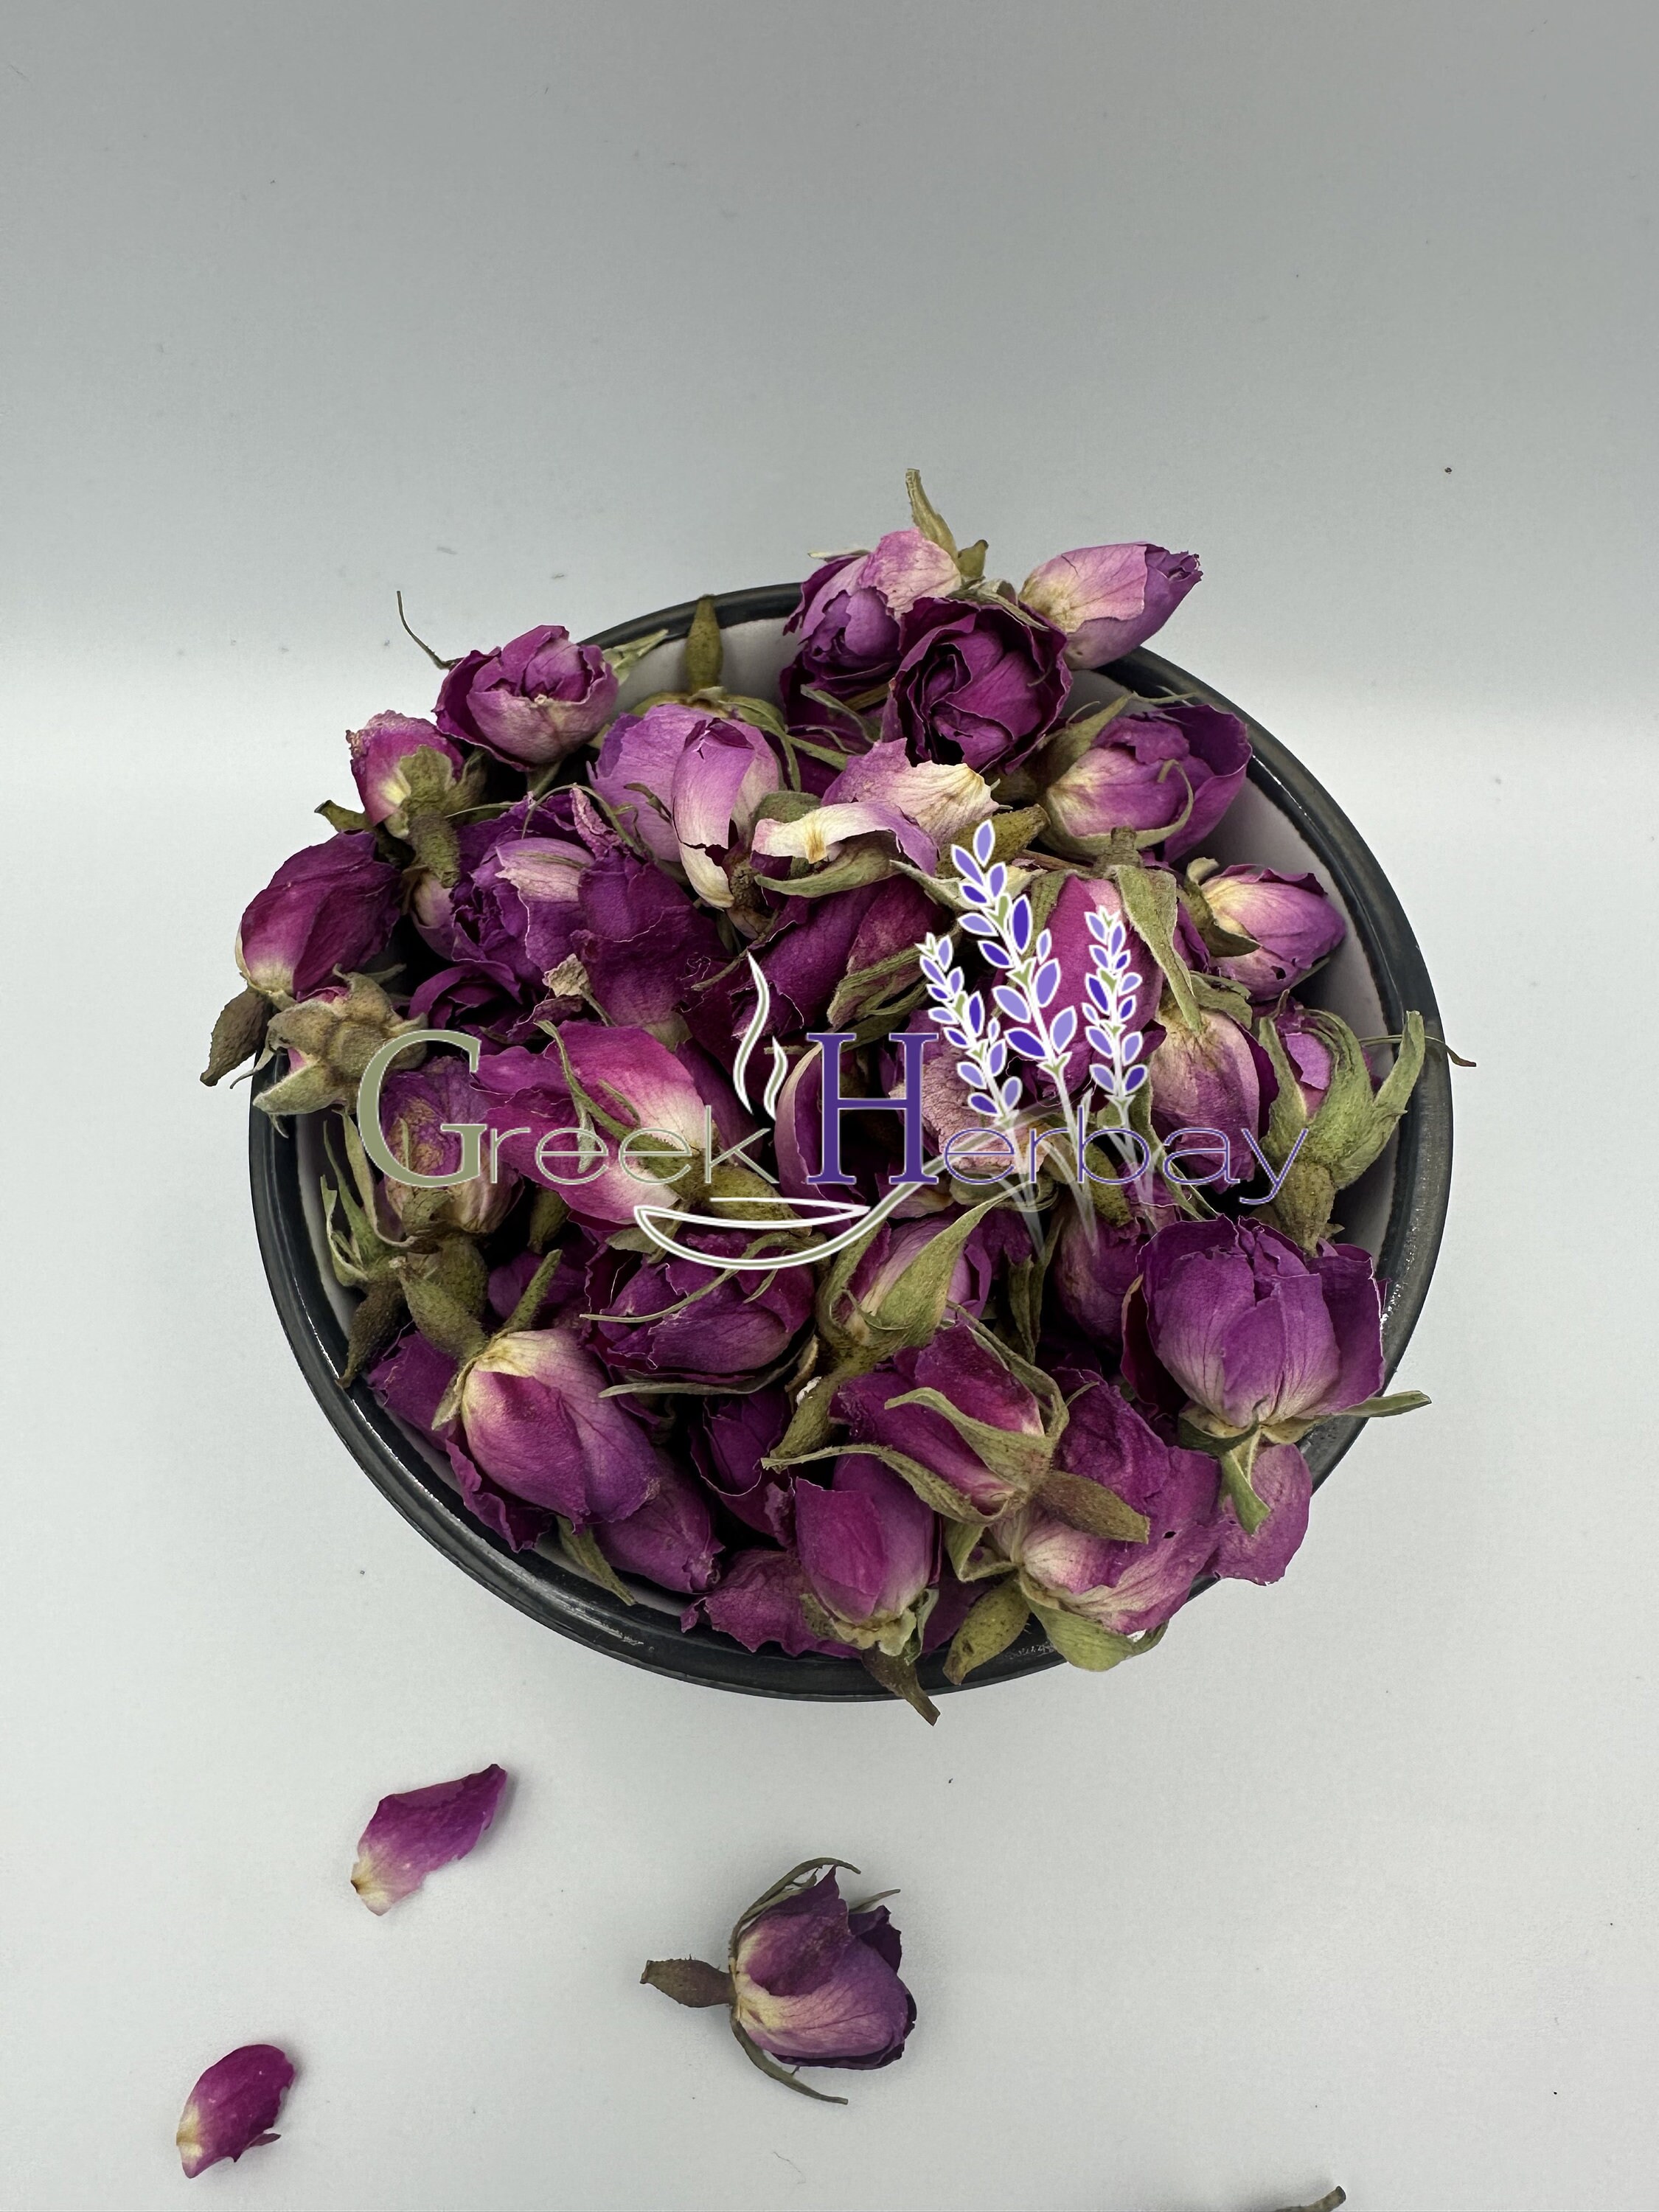 Fragrant Rose Tea Gift Set with Natural Pink Rosa Damascena Rose Buds -  Culinary Grade Health Herbal Flower Tea